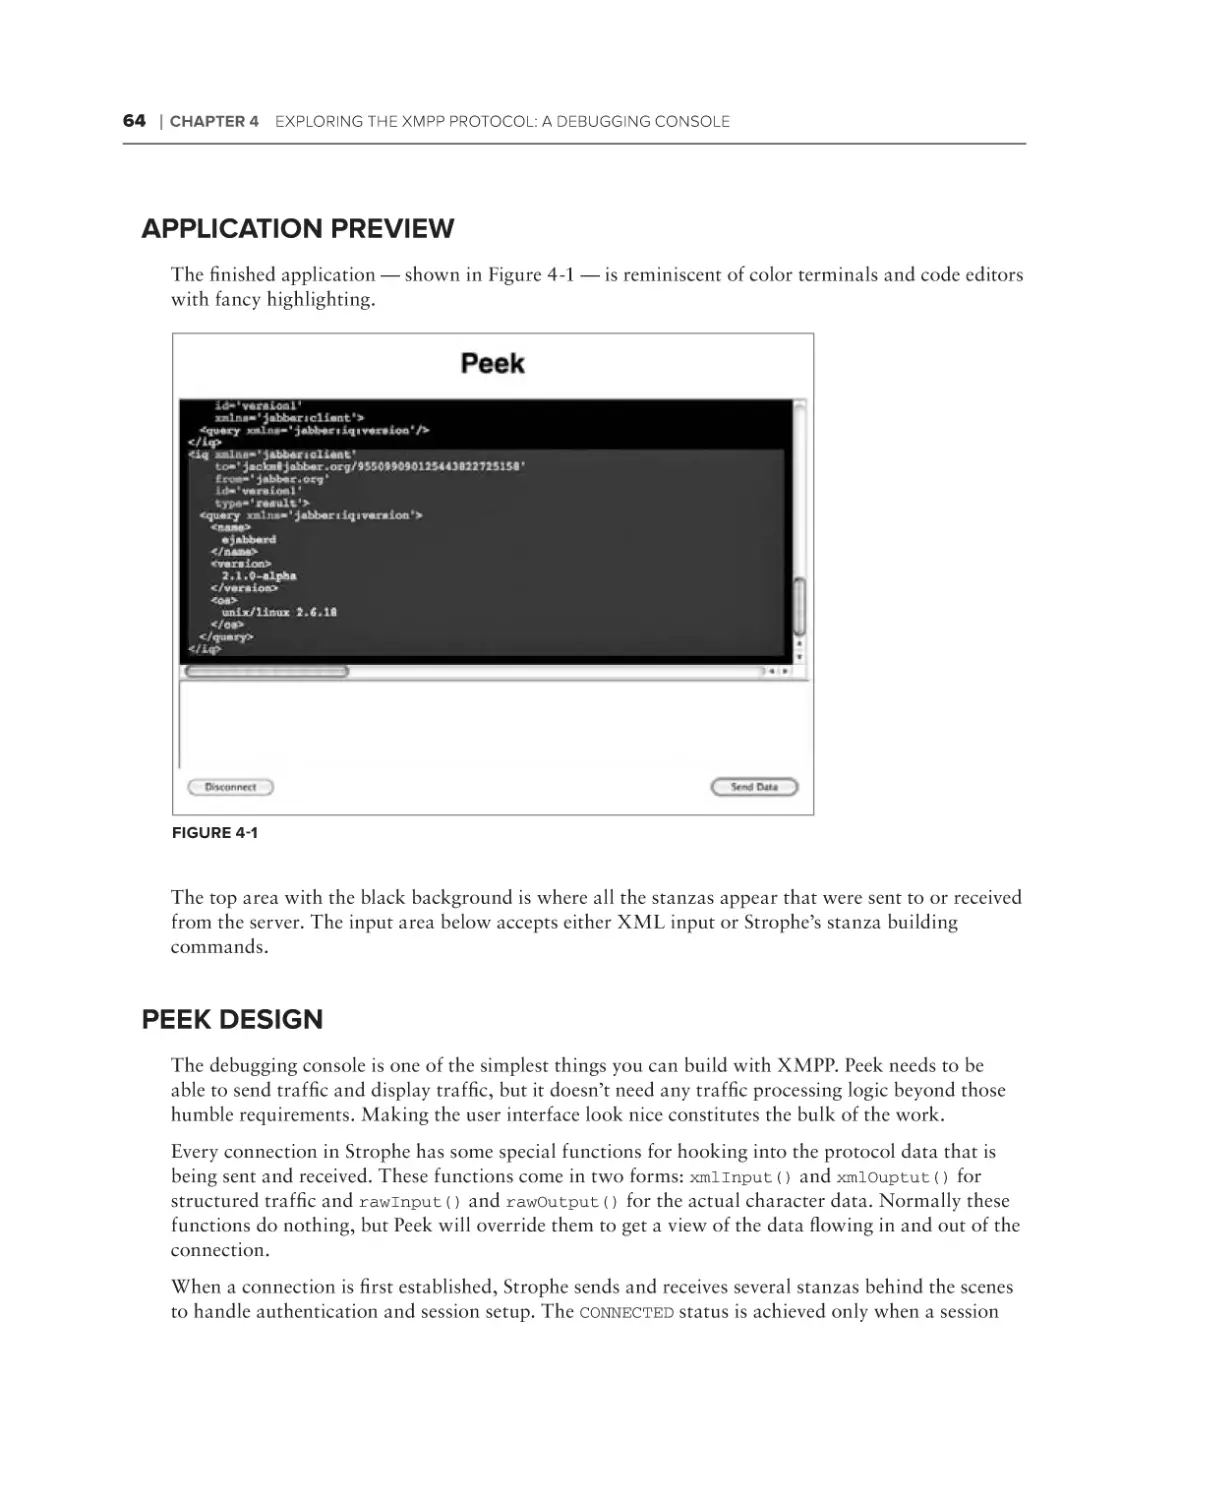 Application Preview
Peek Design